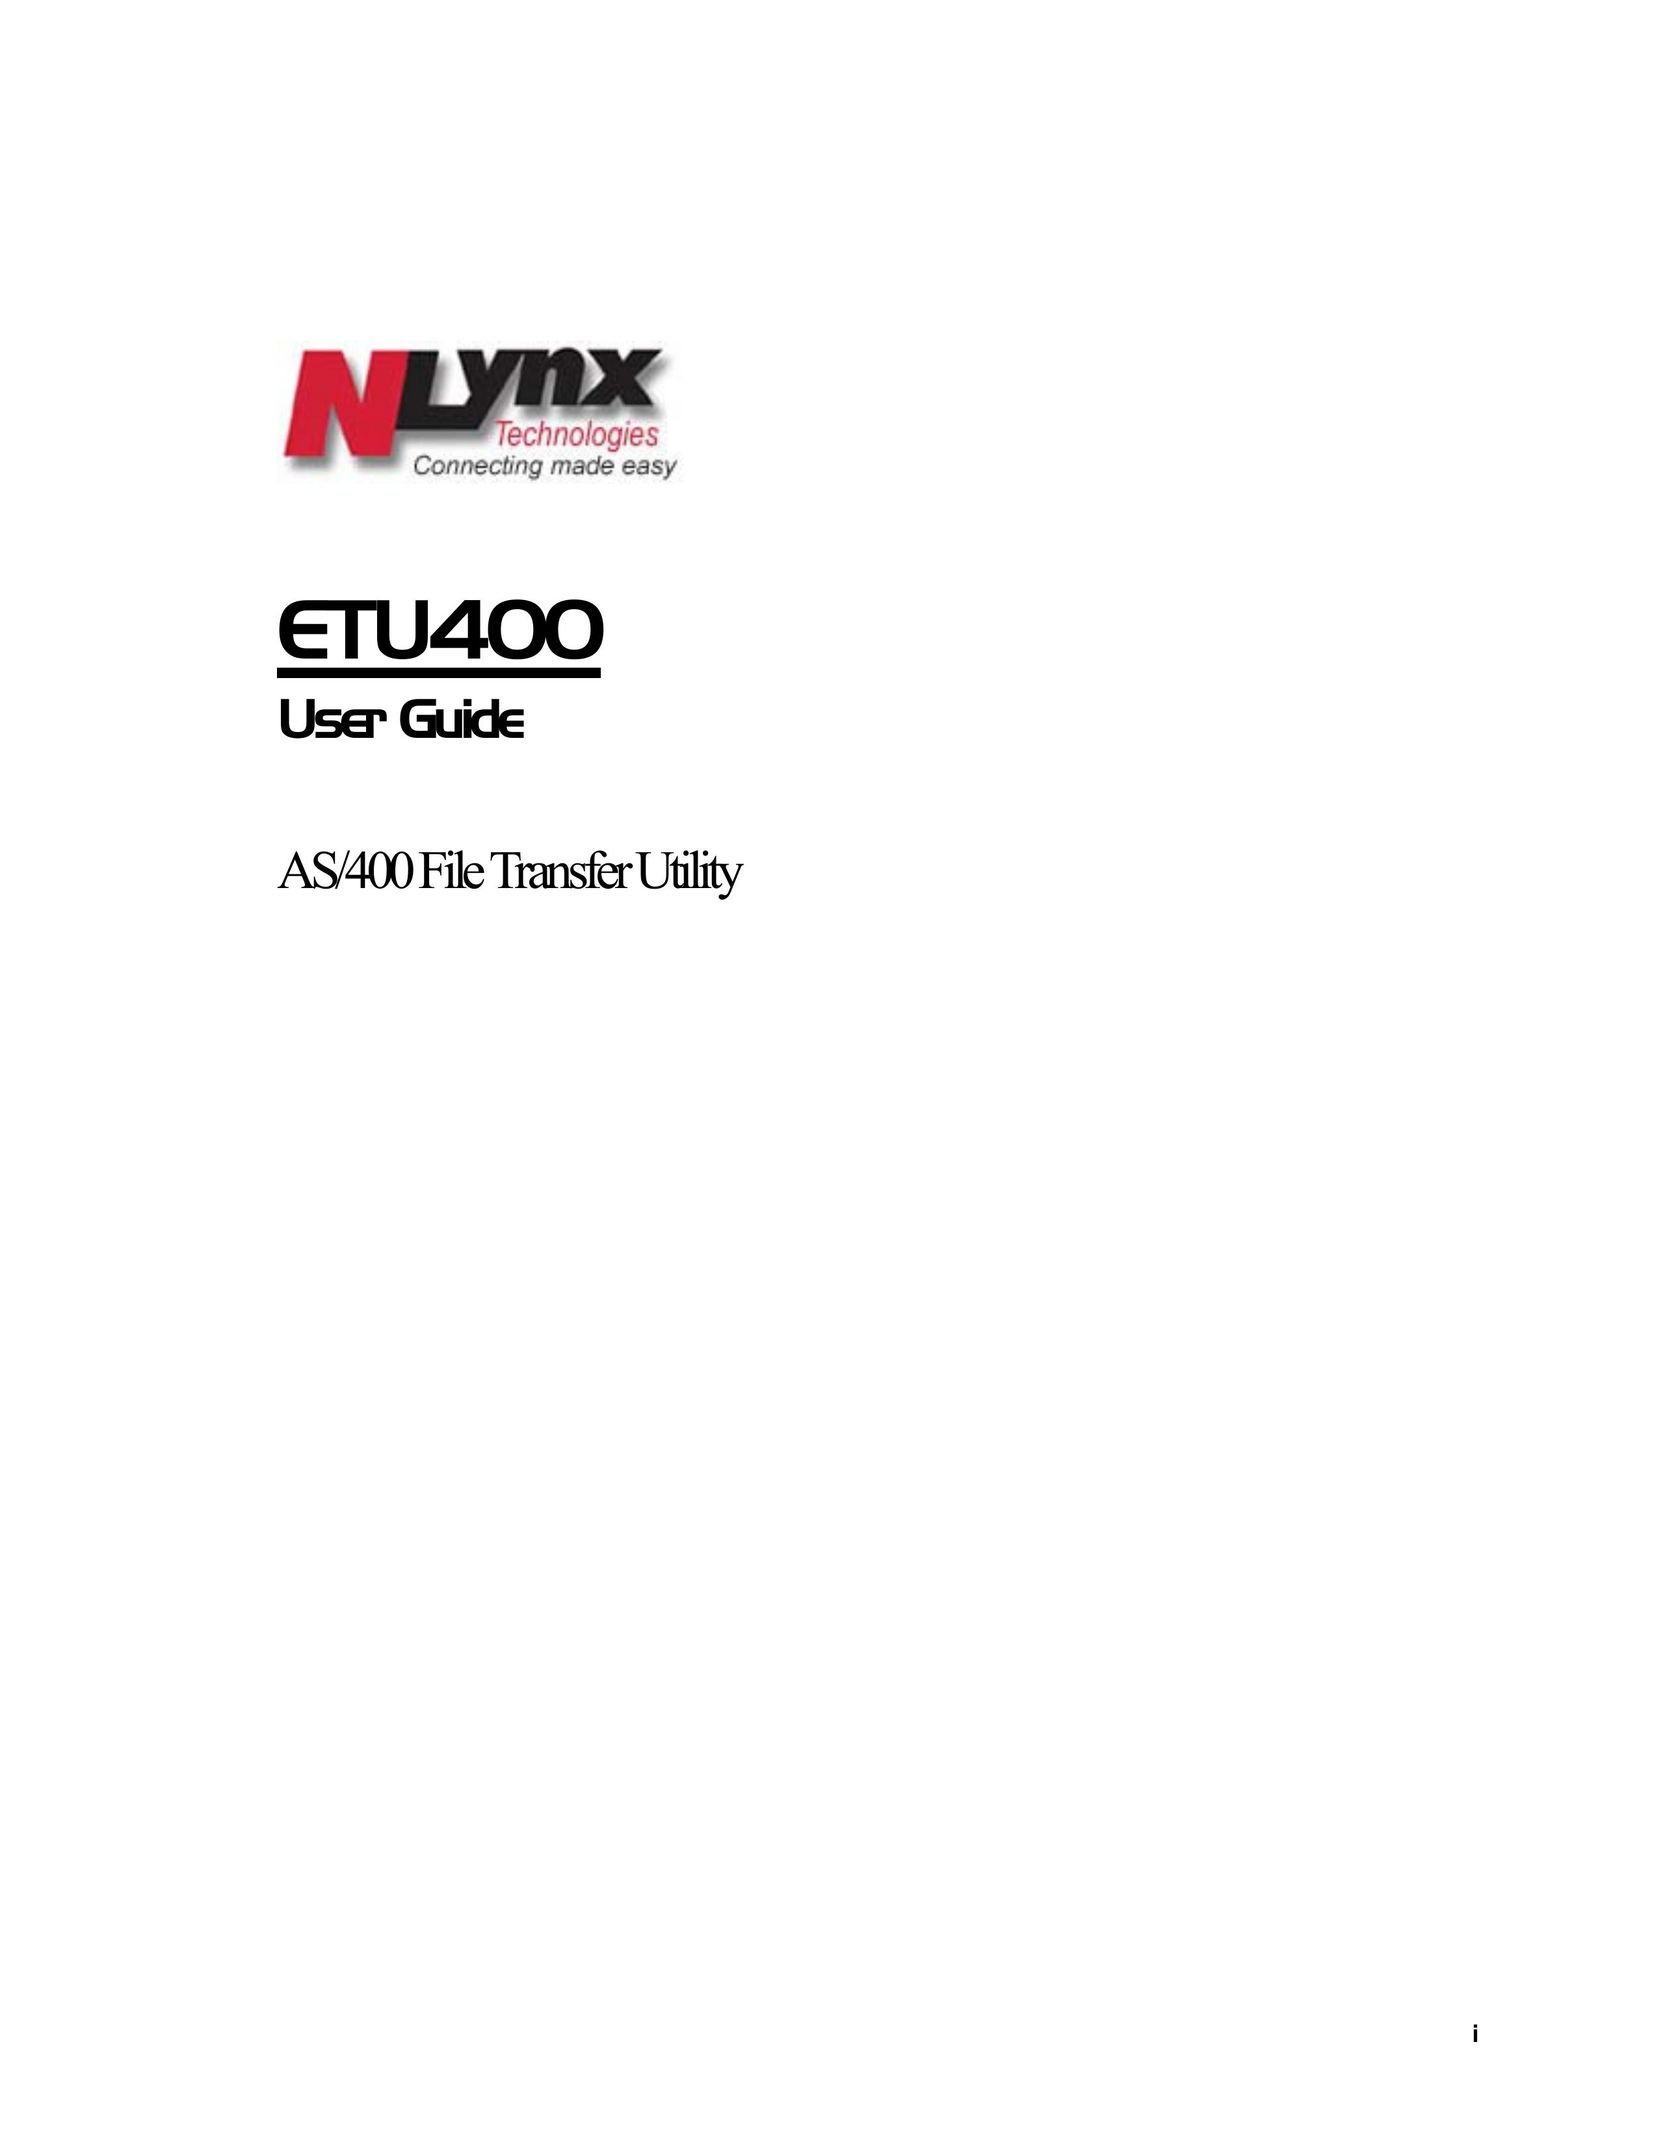 Nlynx ETU400 Network Card User Manual